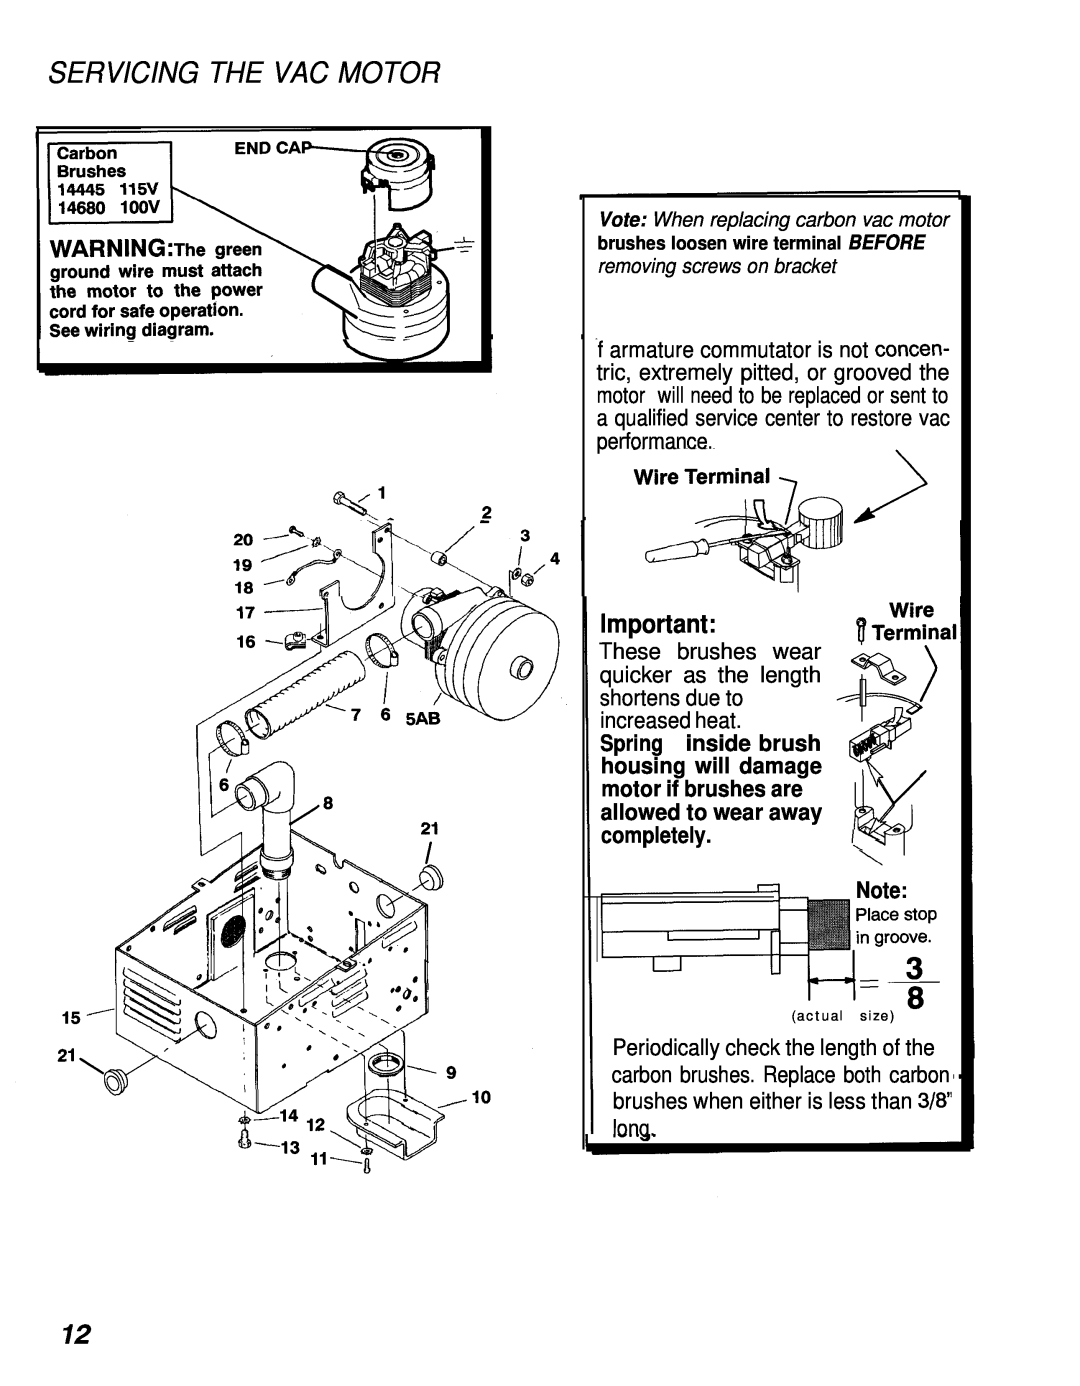 Windsor ADPJ manual Servicing The Vac Motor, Vote When replacing carbon vac motor, removing screws on bracket 